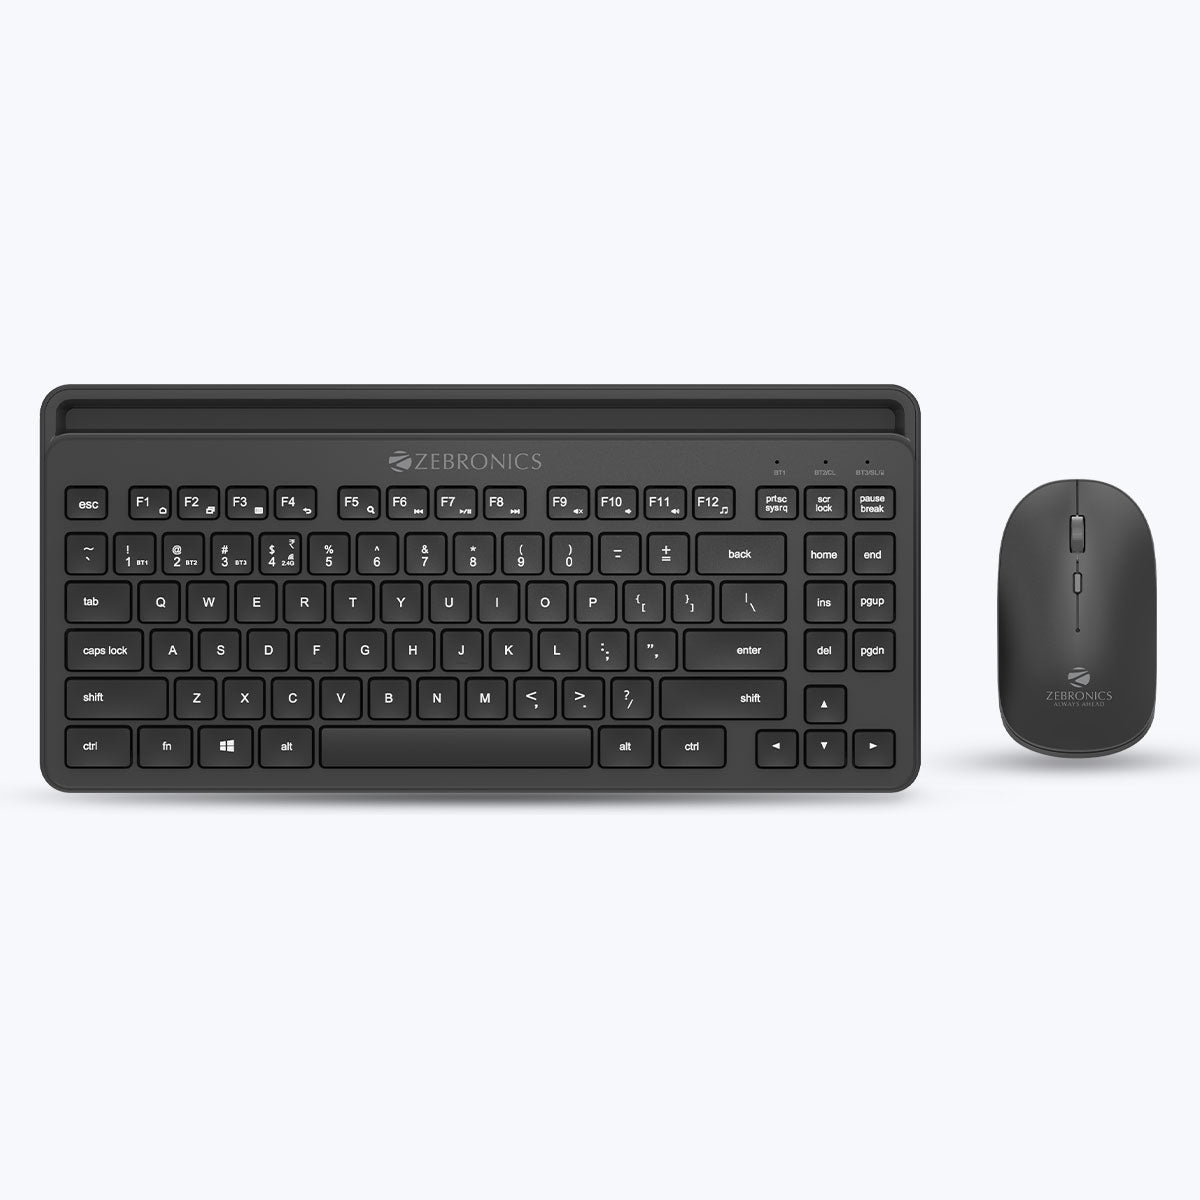 Zeb-Companion 110 -  Keyboard and Mouse Combo - Zebronics